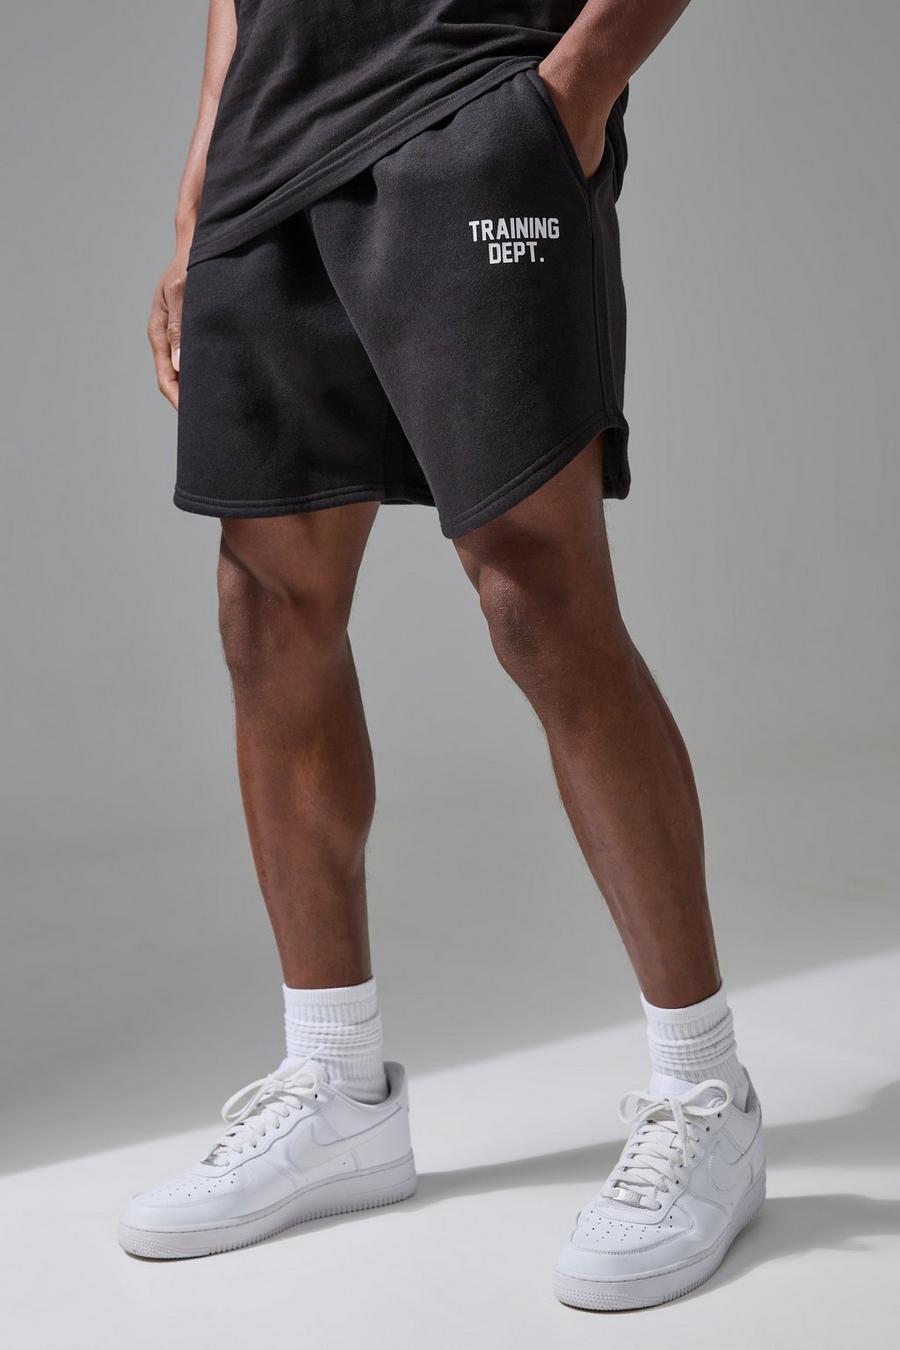 Man Active Training Dept Jersey-Shorts, Black image number 1